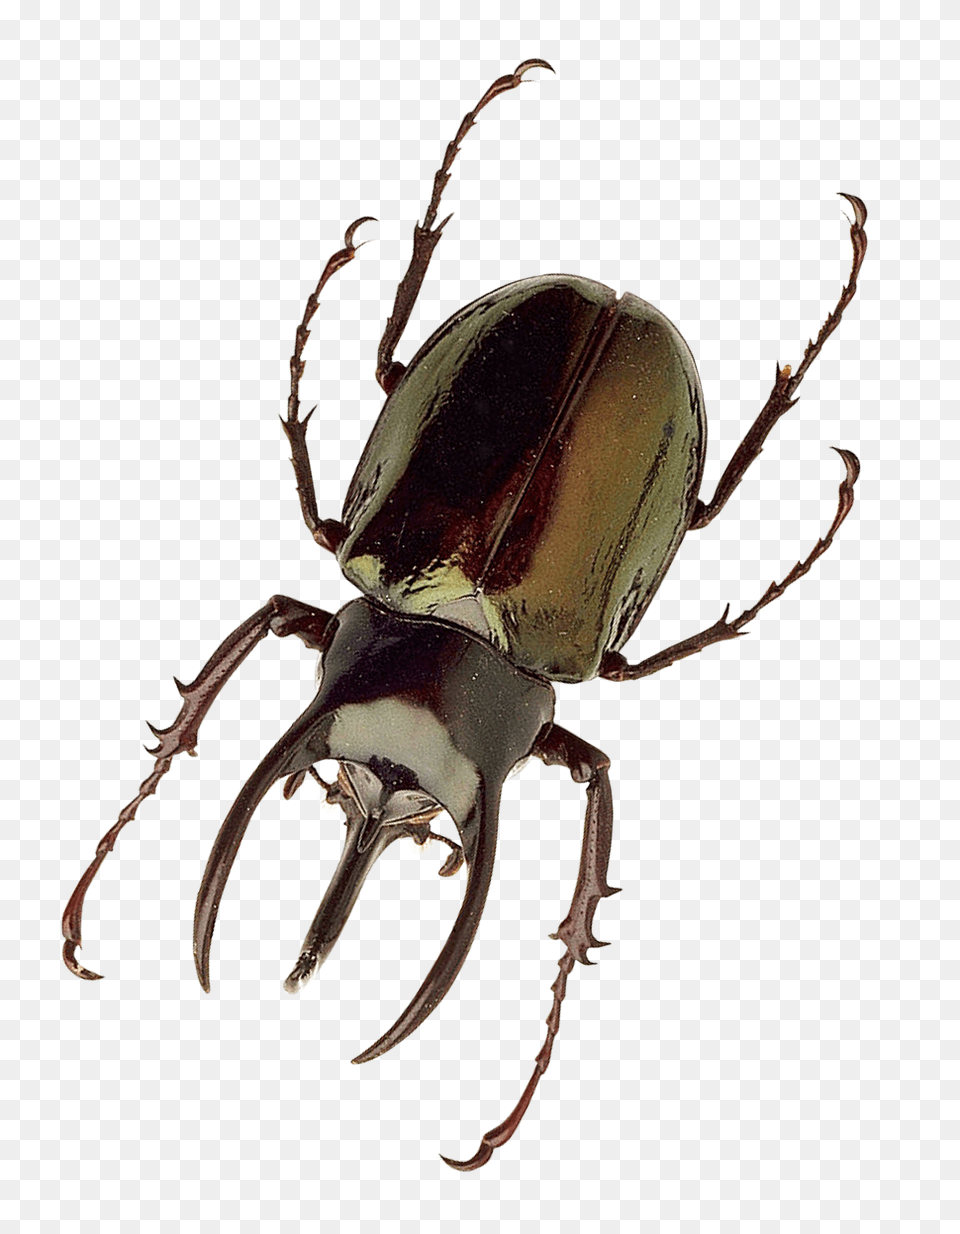 Pngpix Com Insect Transparent Image, Animal, Invertebrate, Spider, Dung Beetle Free Png Download